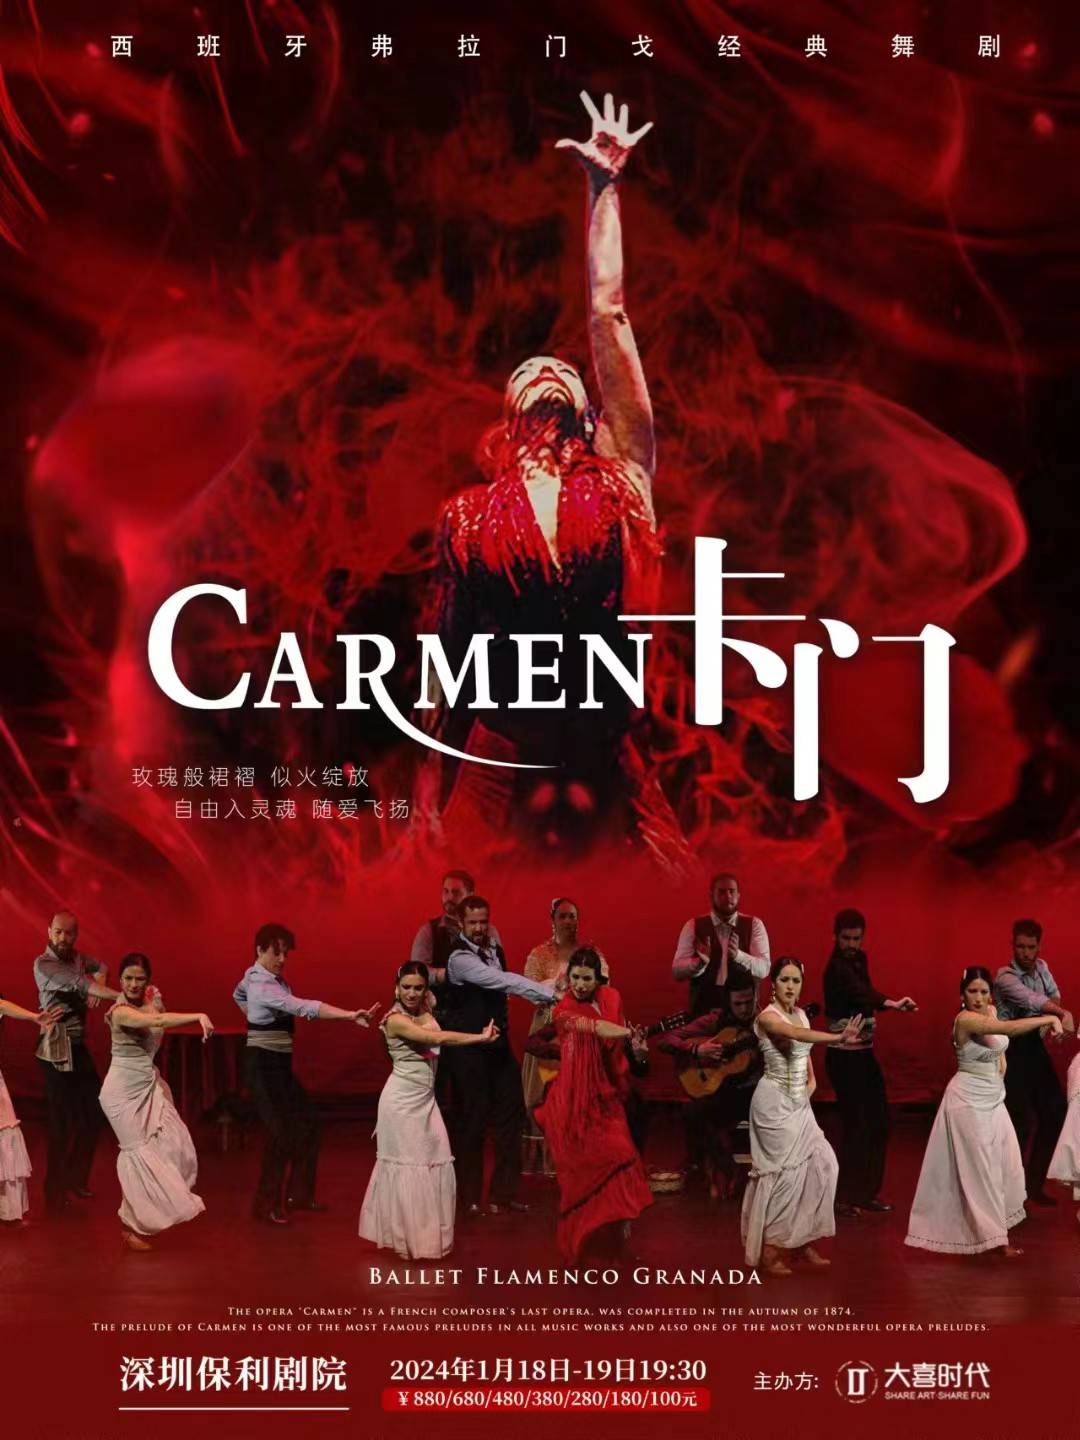 Platinum Edition of the Dance Show CARMEN in Shenzhen